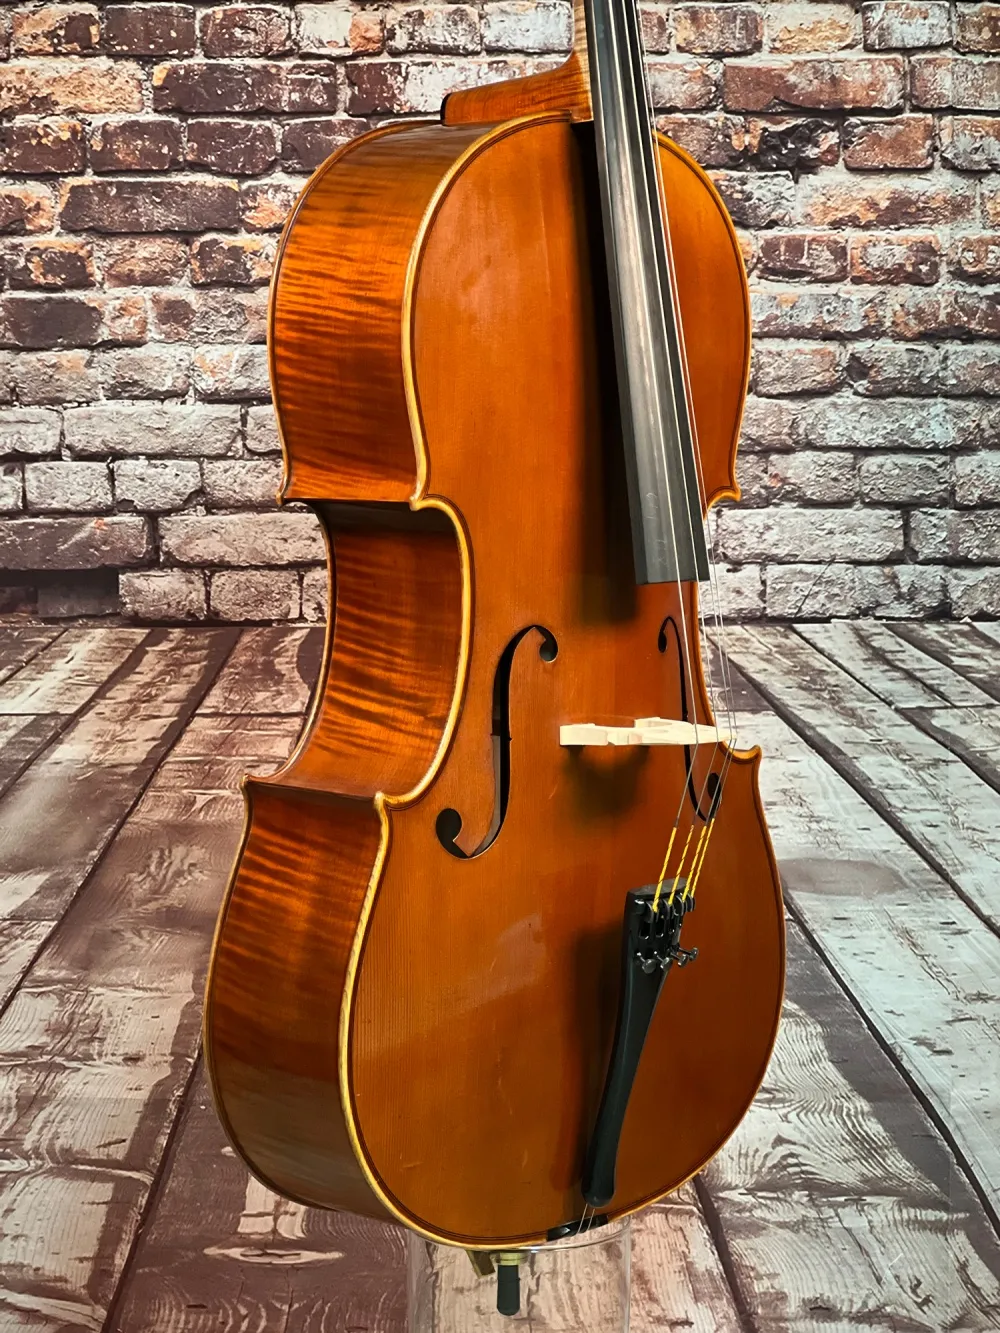 Stoica Alin 7/8 Strad. "Meister" Cello, Handarbeit aus RO